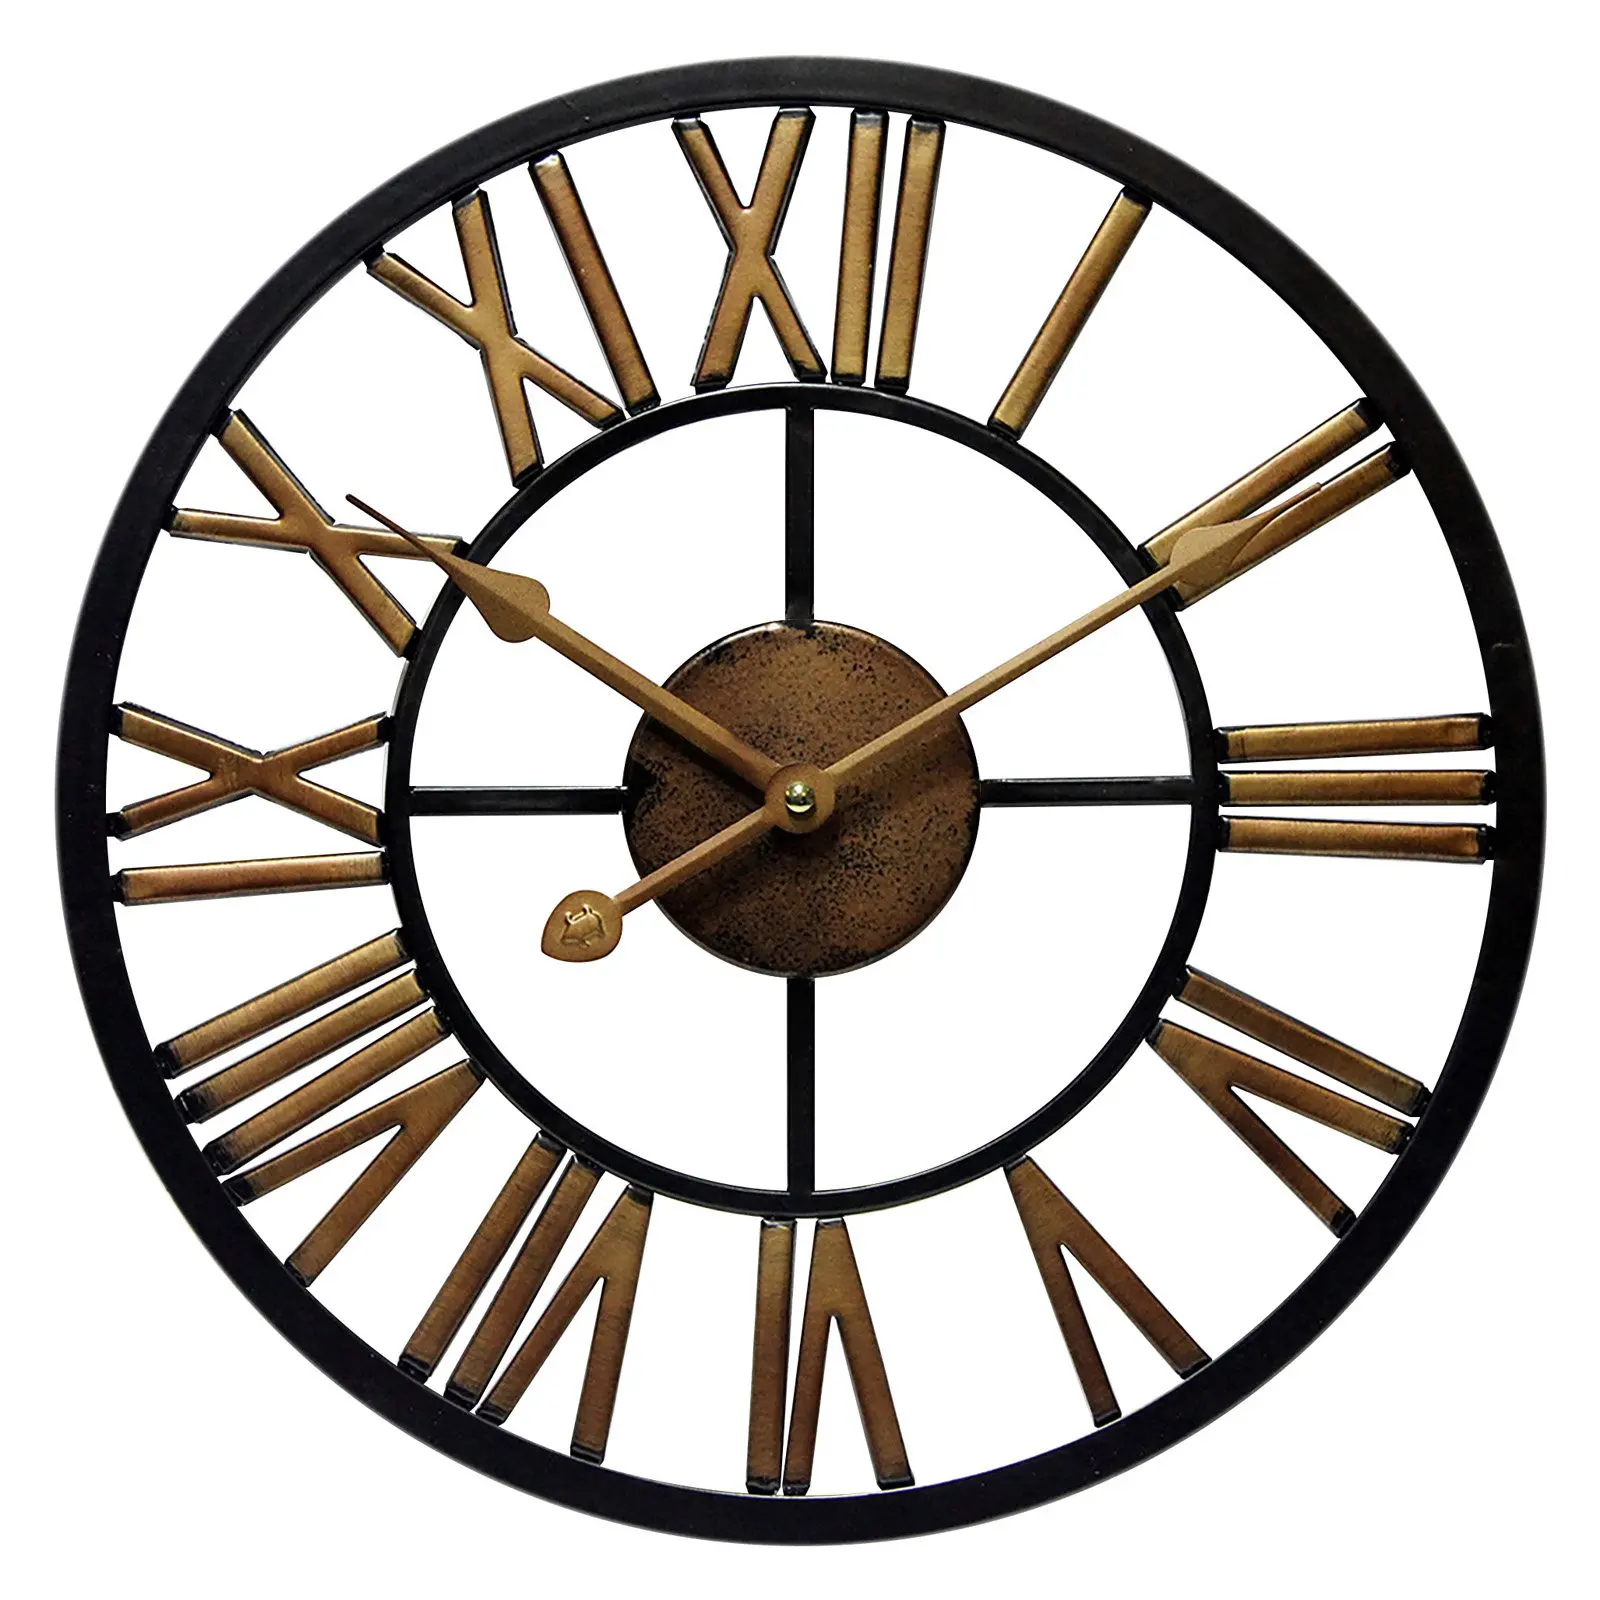 Круглые металлические часы. Настенные часы, бронза. Часы настенные бронзовые. Часы кованые настенные с римскими цифрами. Часы настенные круглые металлические.